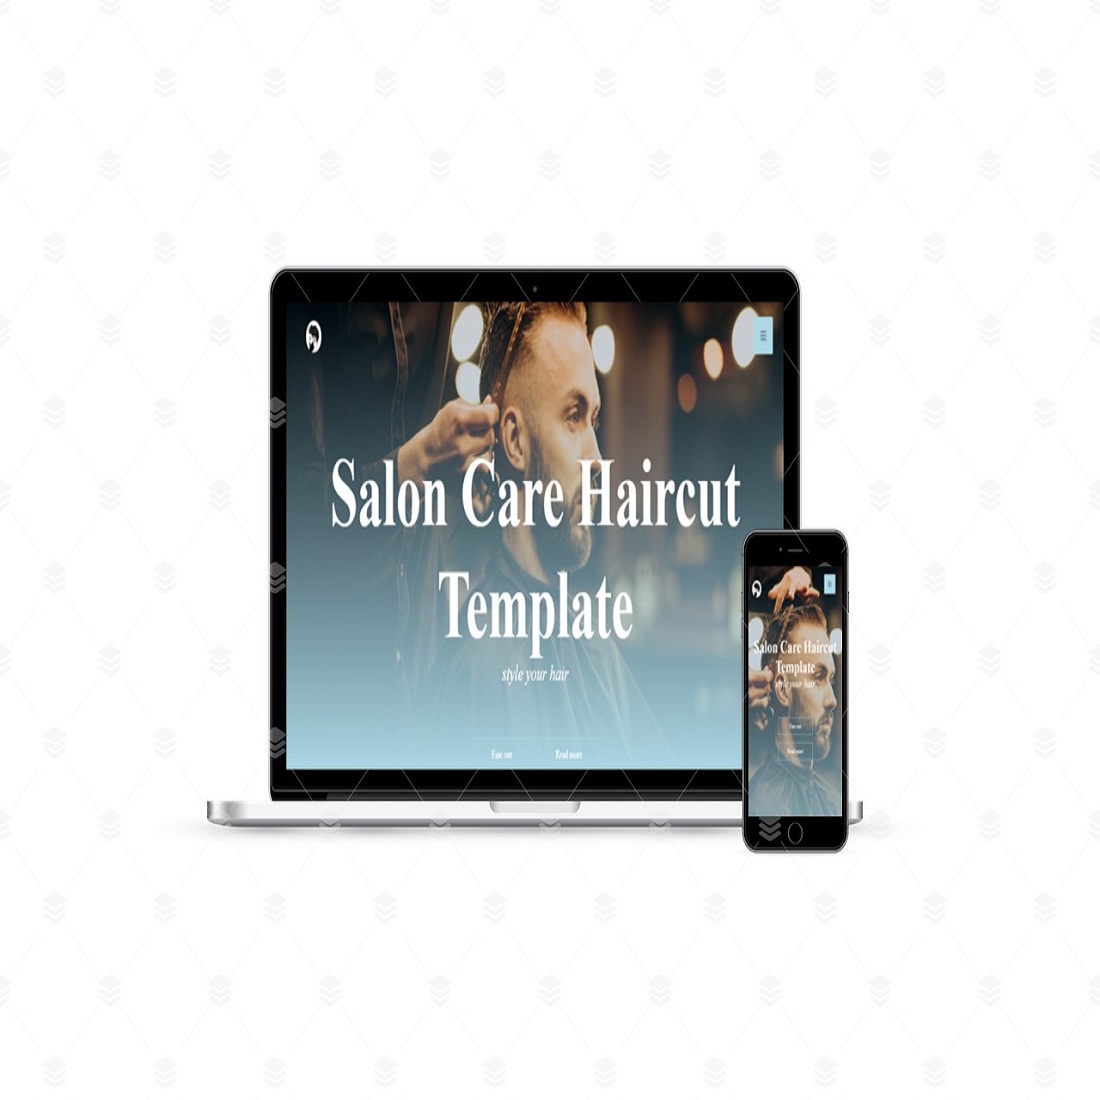 HTML5 Responsive salon care Haircut Template cover image.